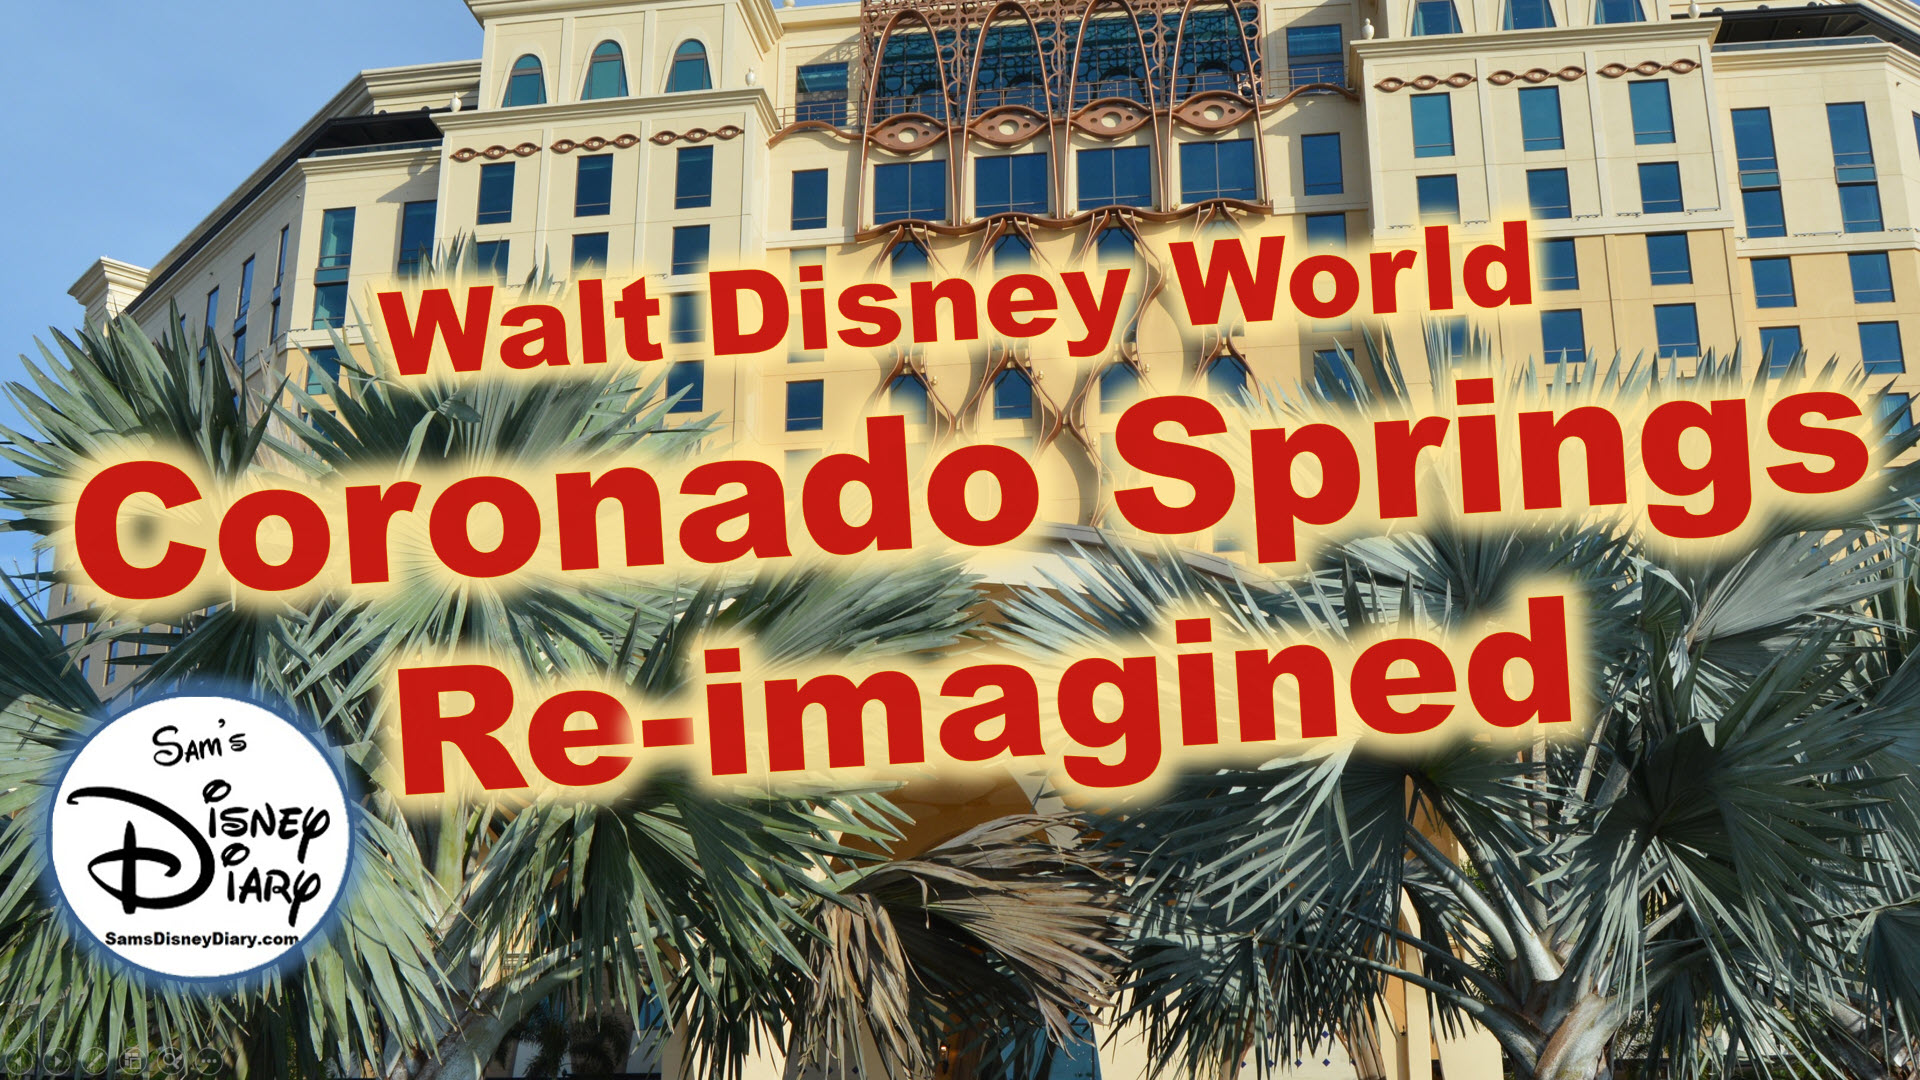 The Re-imagined Walt Disney World Coronado Springs Resort